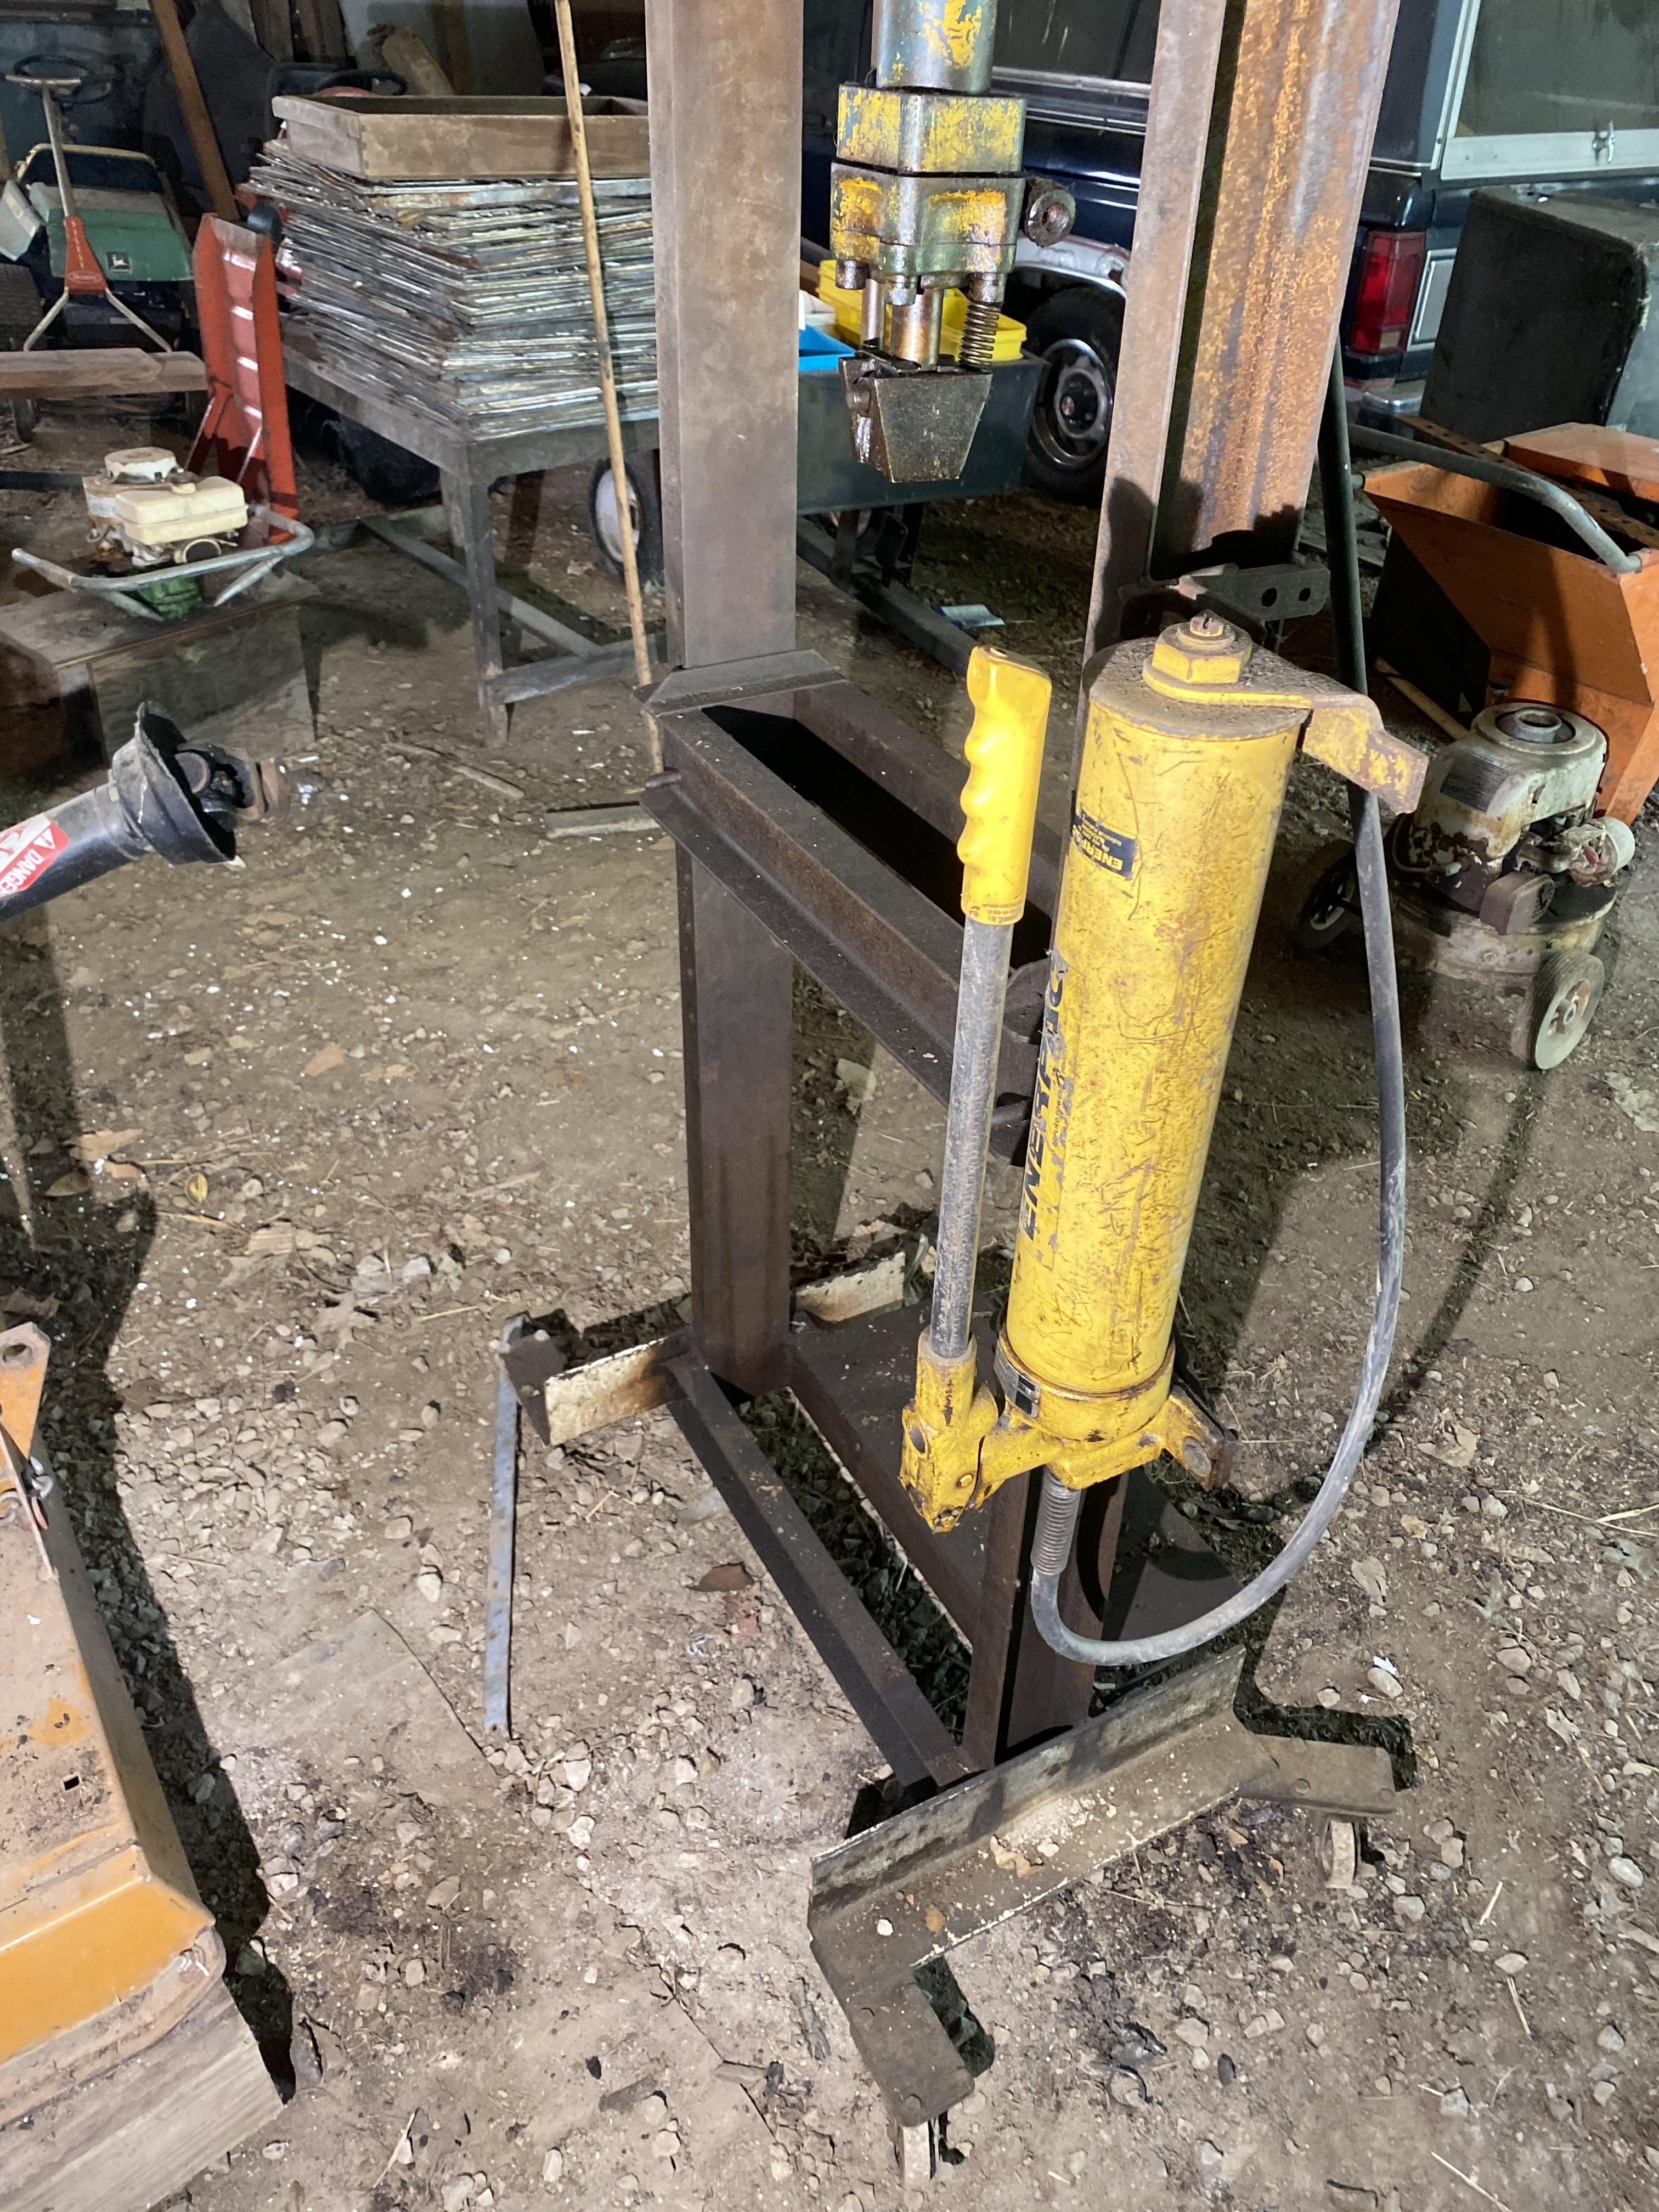 Large upright hydraulic press